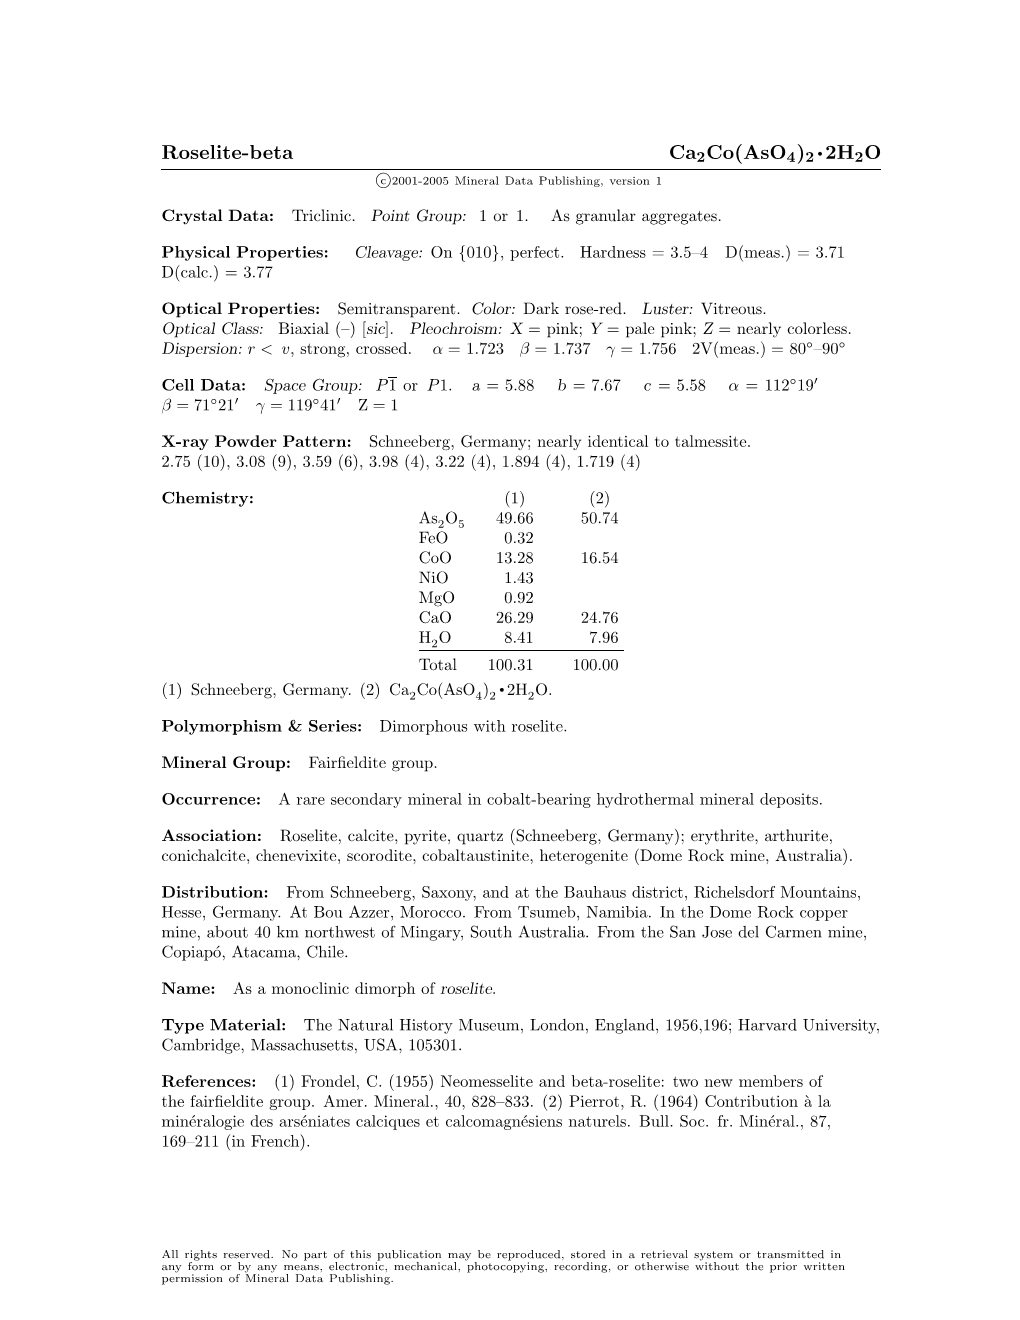 Roselite-Beta Ca2co(Aso4)2 • 2H2O C 2001-2005 Mineral Data Publishing, Version 1